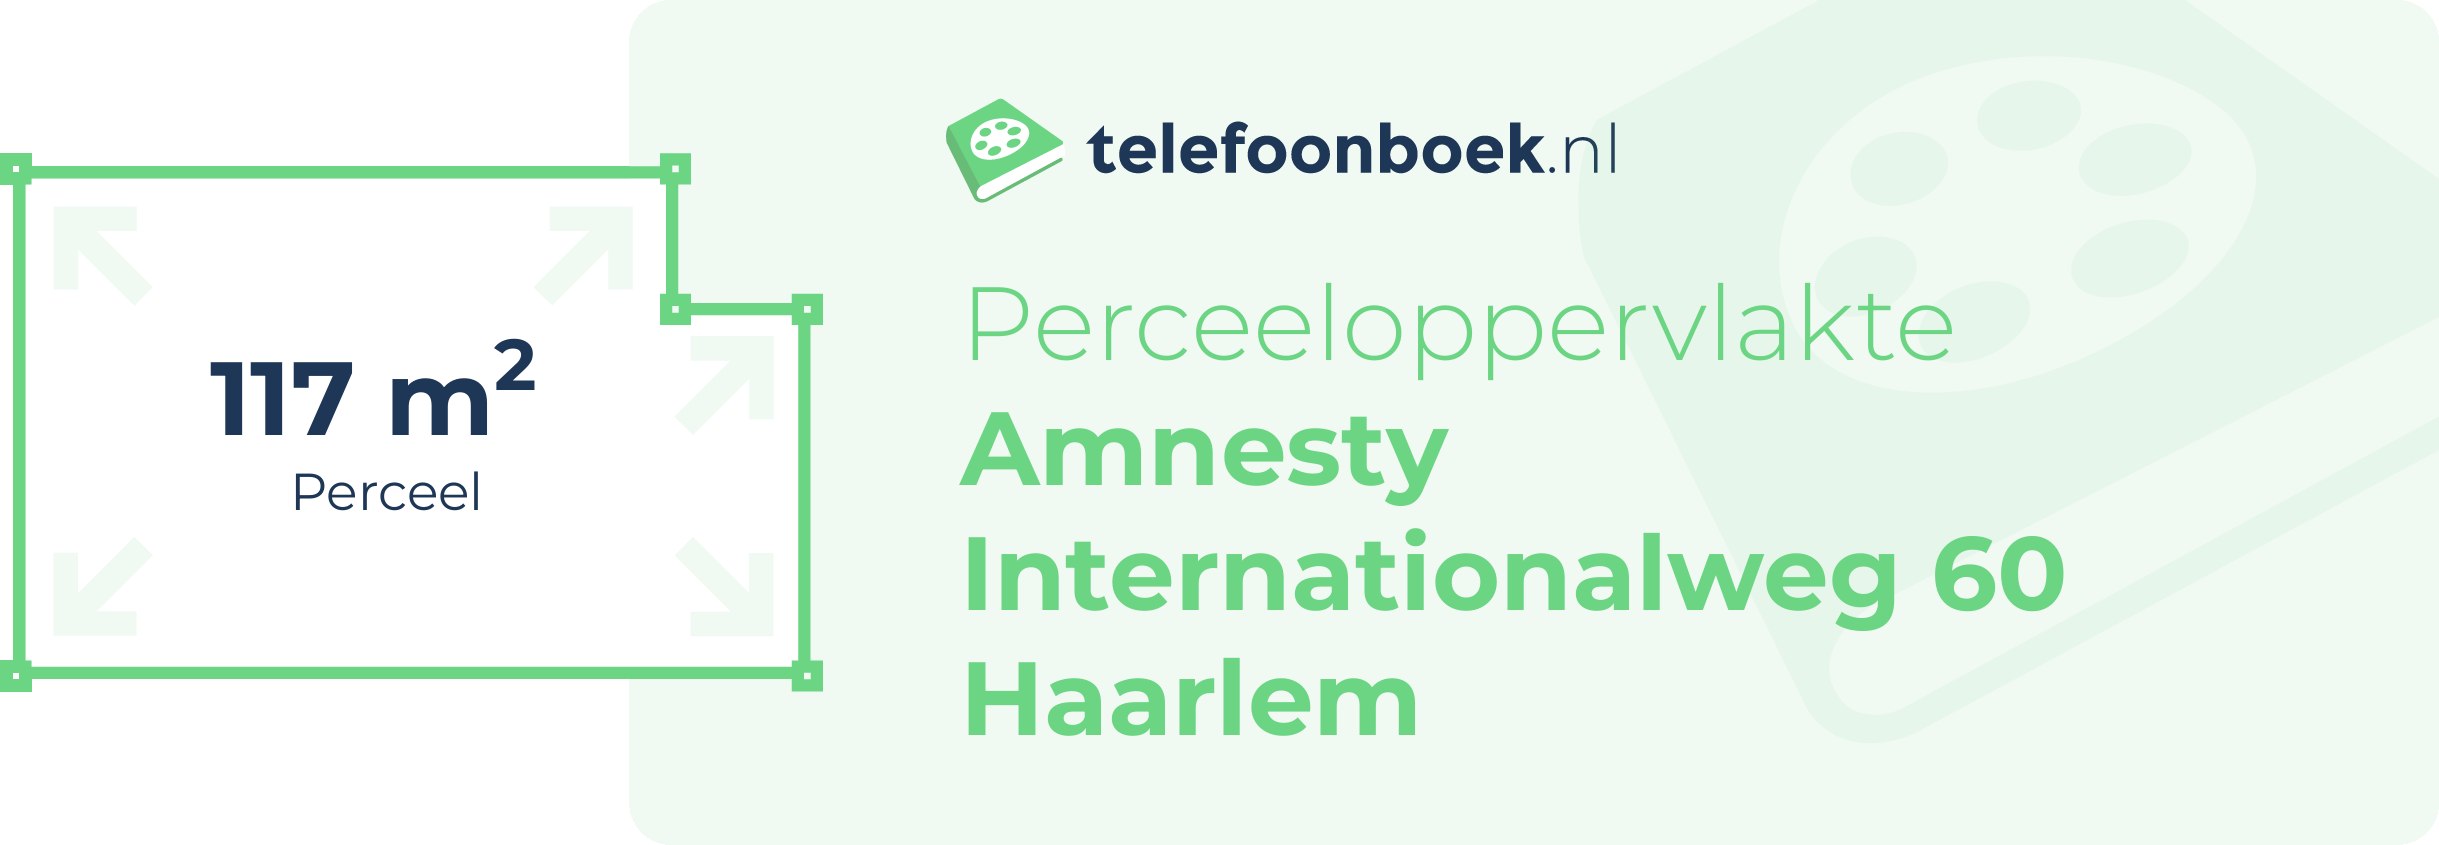 Perceeloppervlakte Amnesty Internationalweg 60 Haarlem